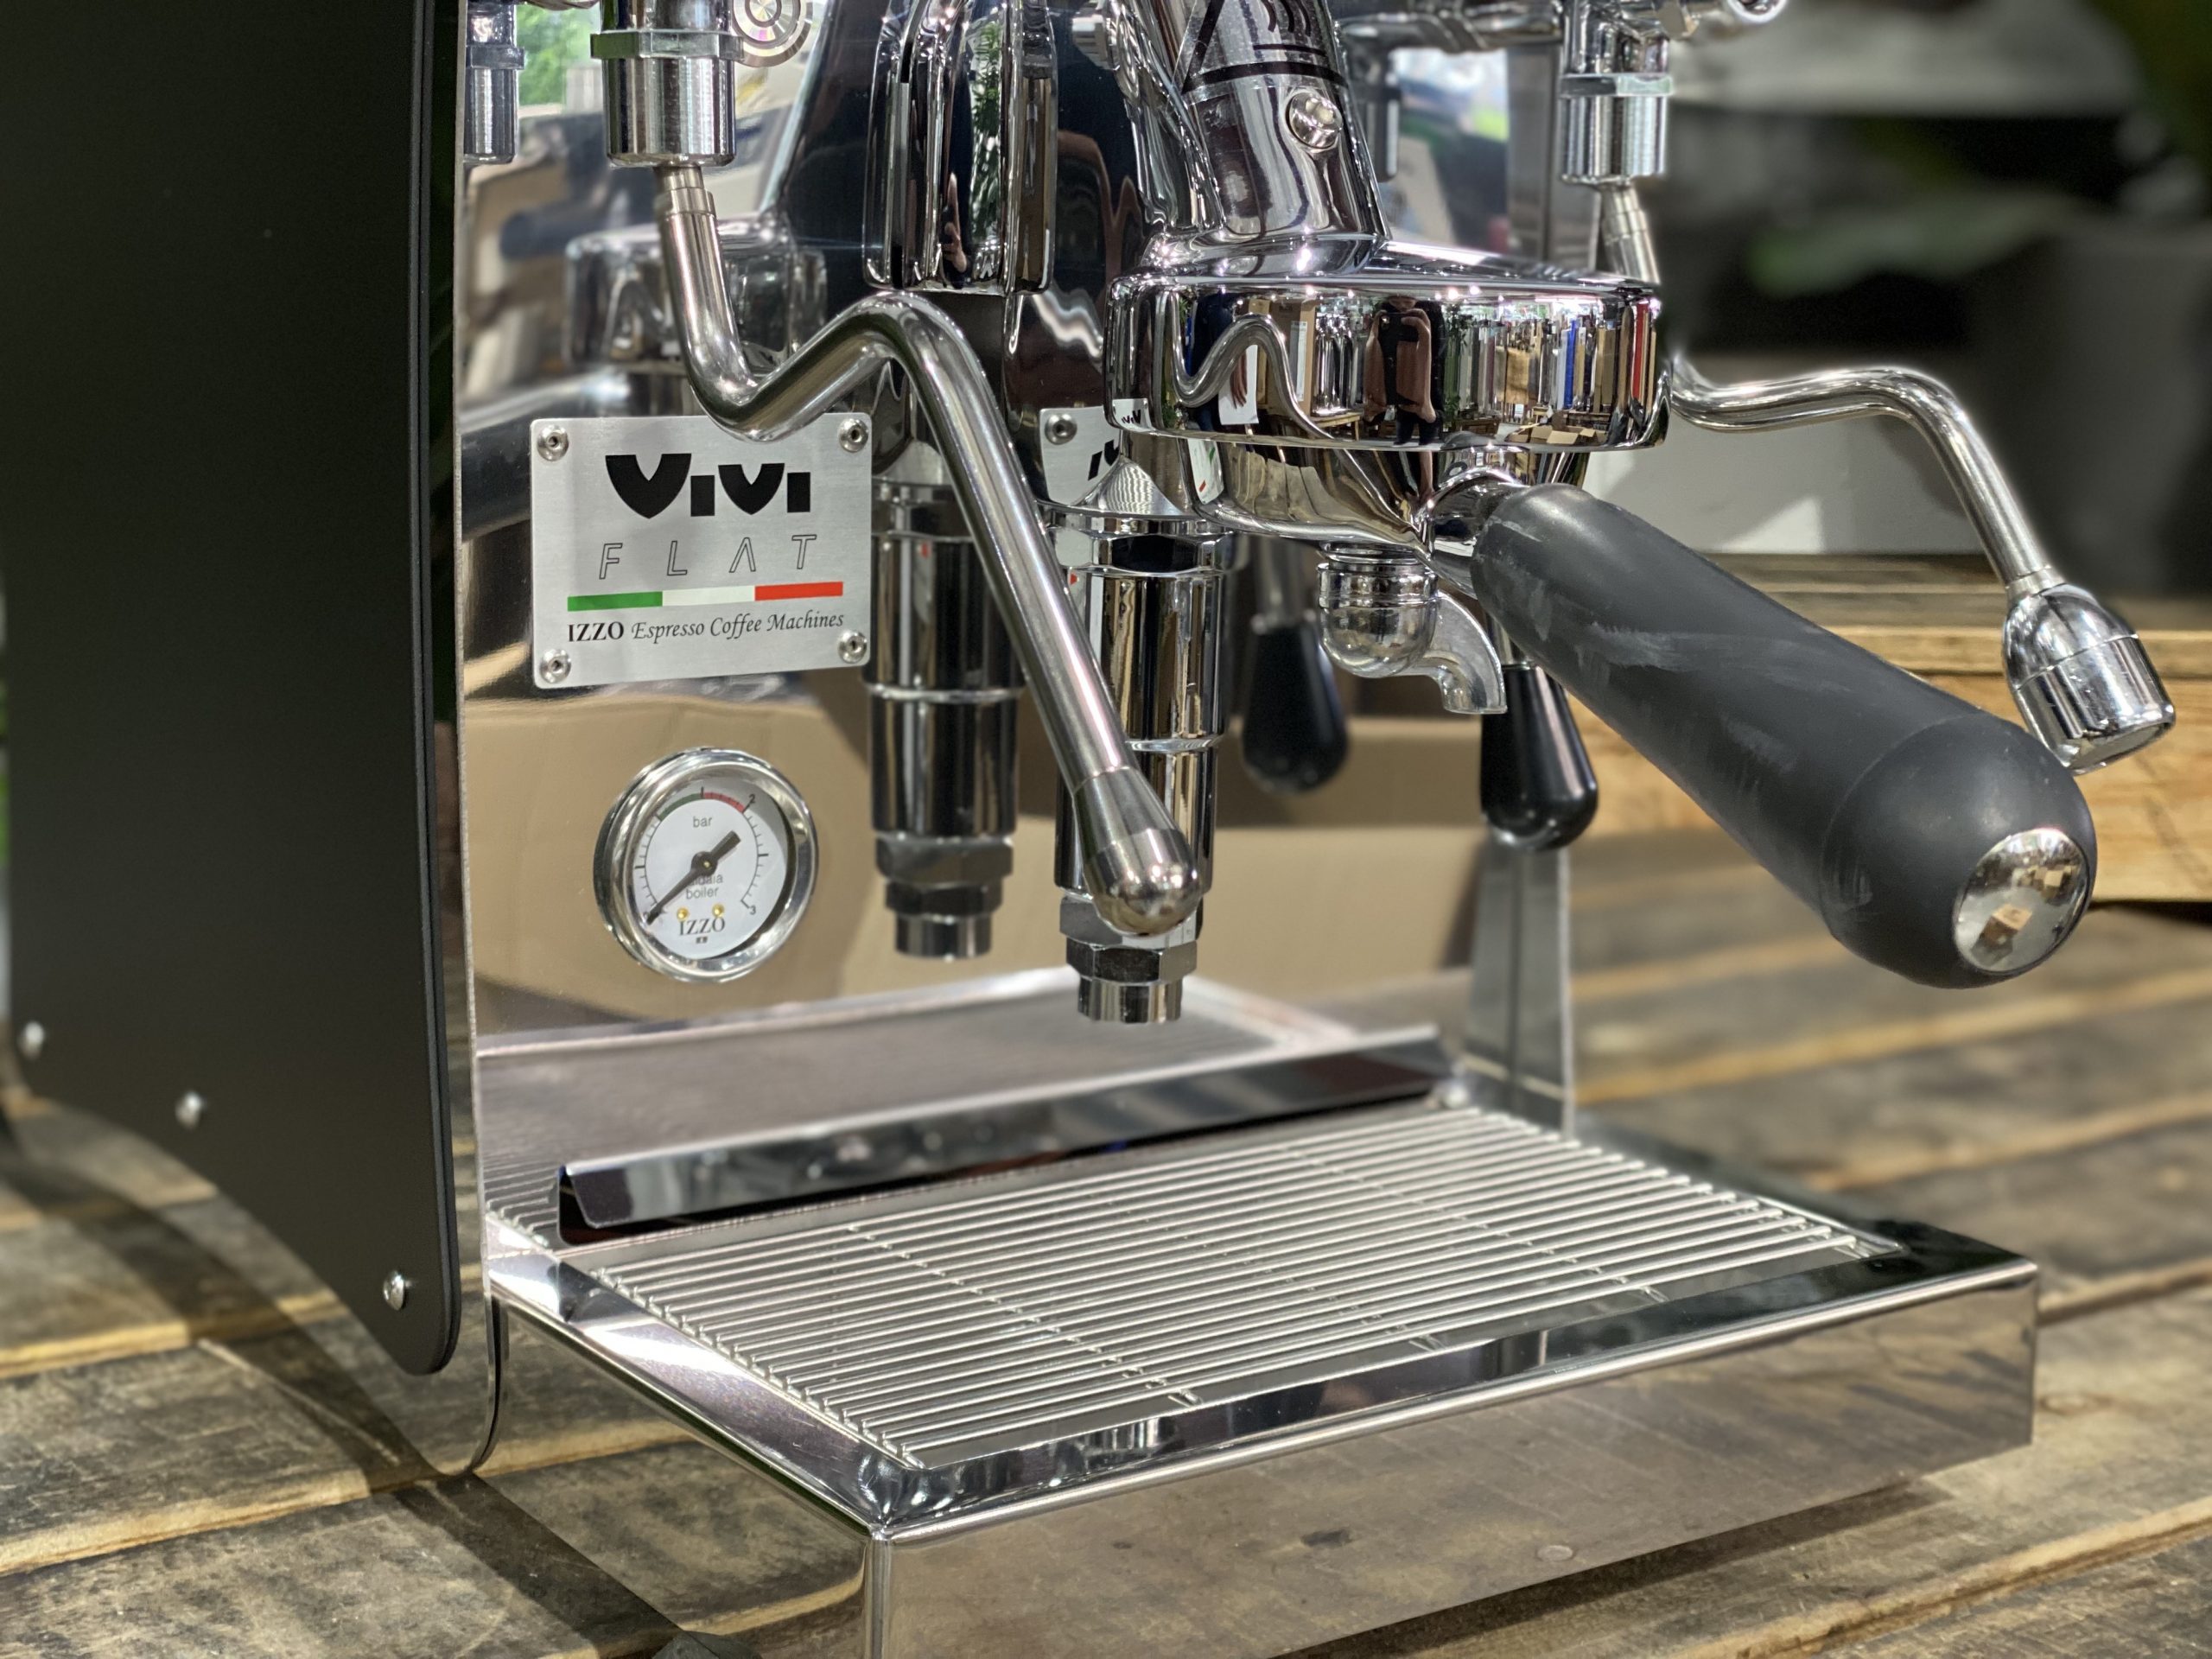 Izzo-Vivi-Flat-1-Group-Black-New-Espresso-Coffee-Machine-1858-Princes-Highway-Clayton-VIC-3168-Coffee-Machine-WarehouseIMG_4246-scaled